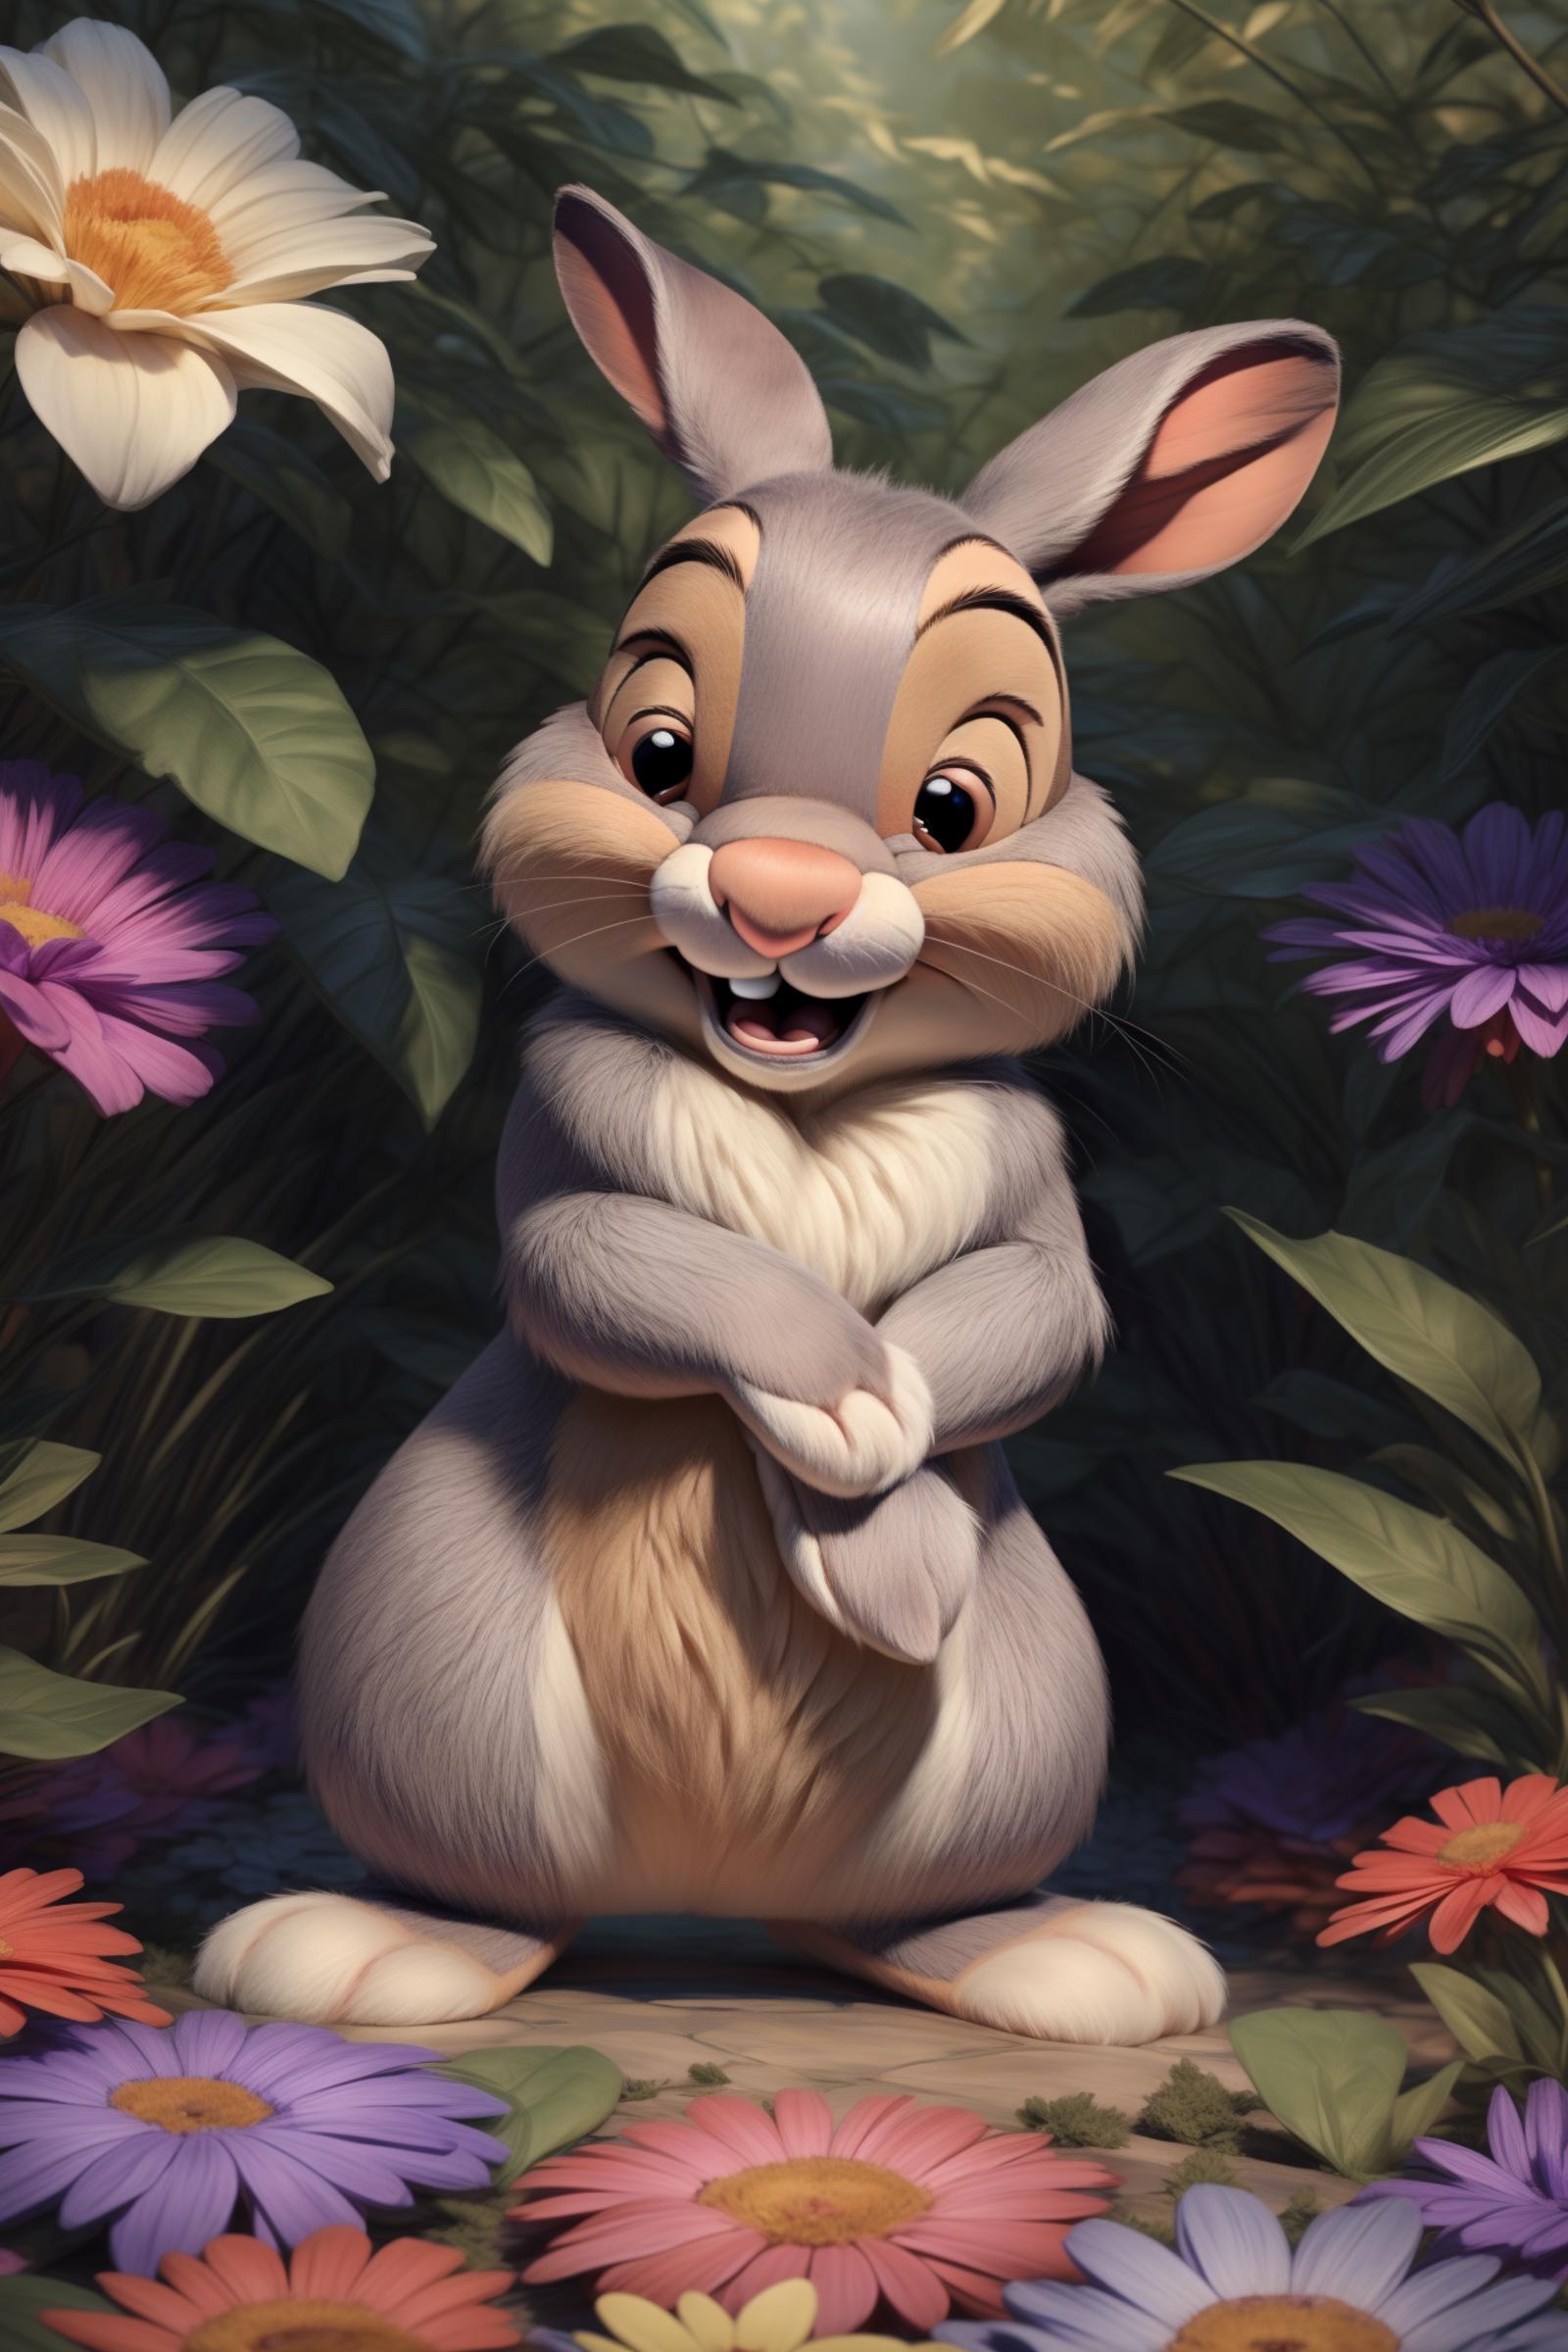 Thumper - Disney's Bambi image by LuckyDaWolf